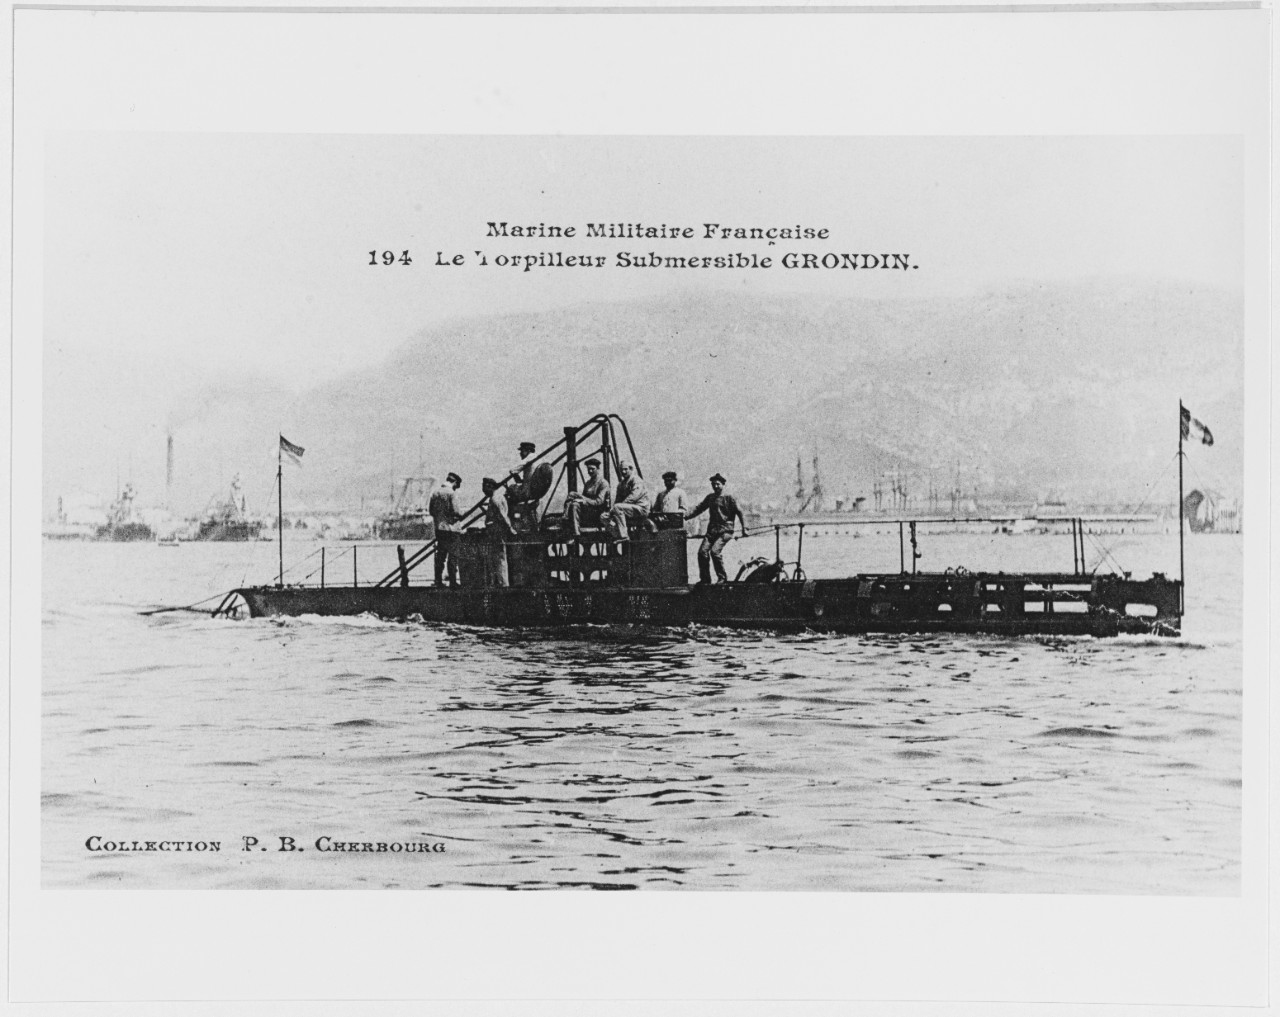 GRONDIN (French Submarine, 1904-13)